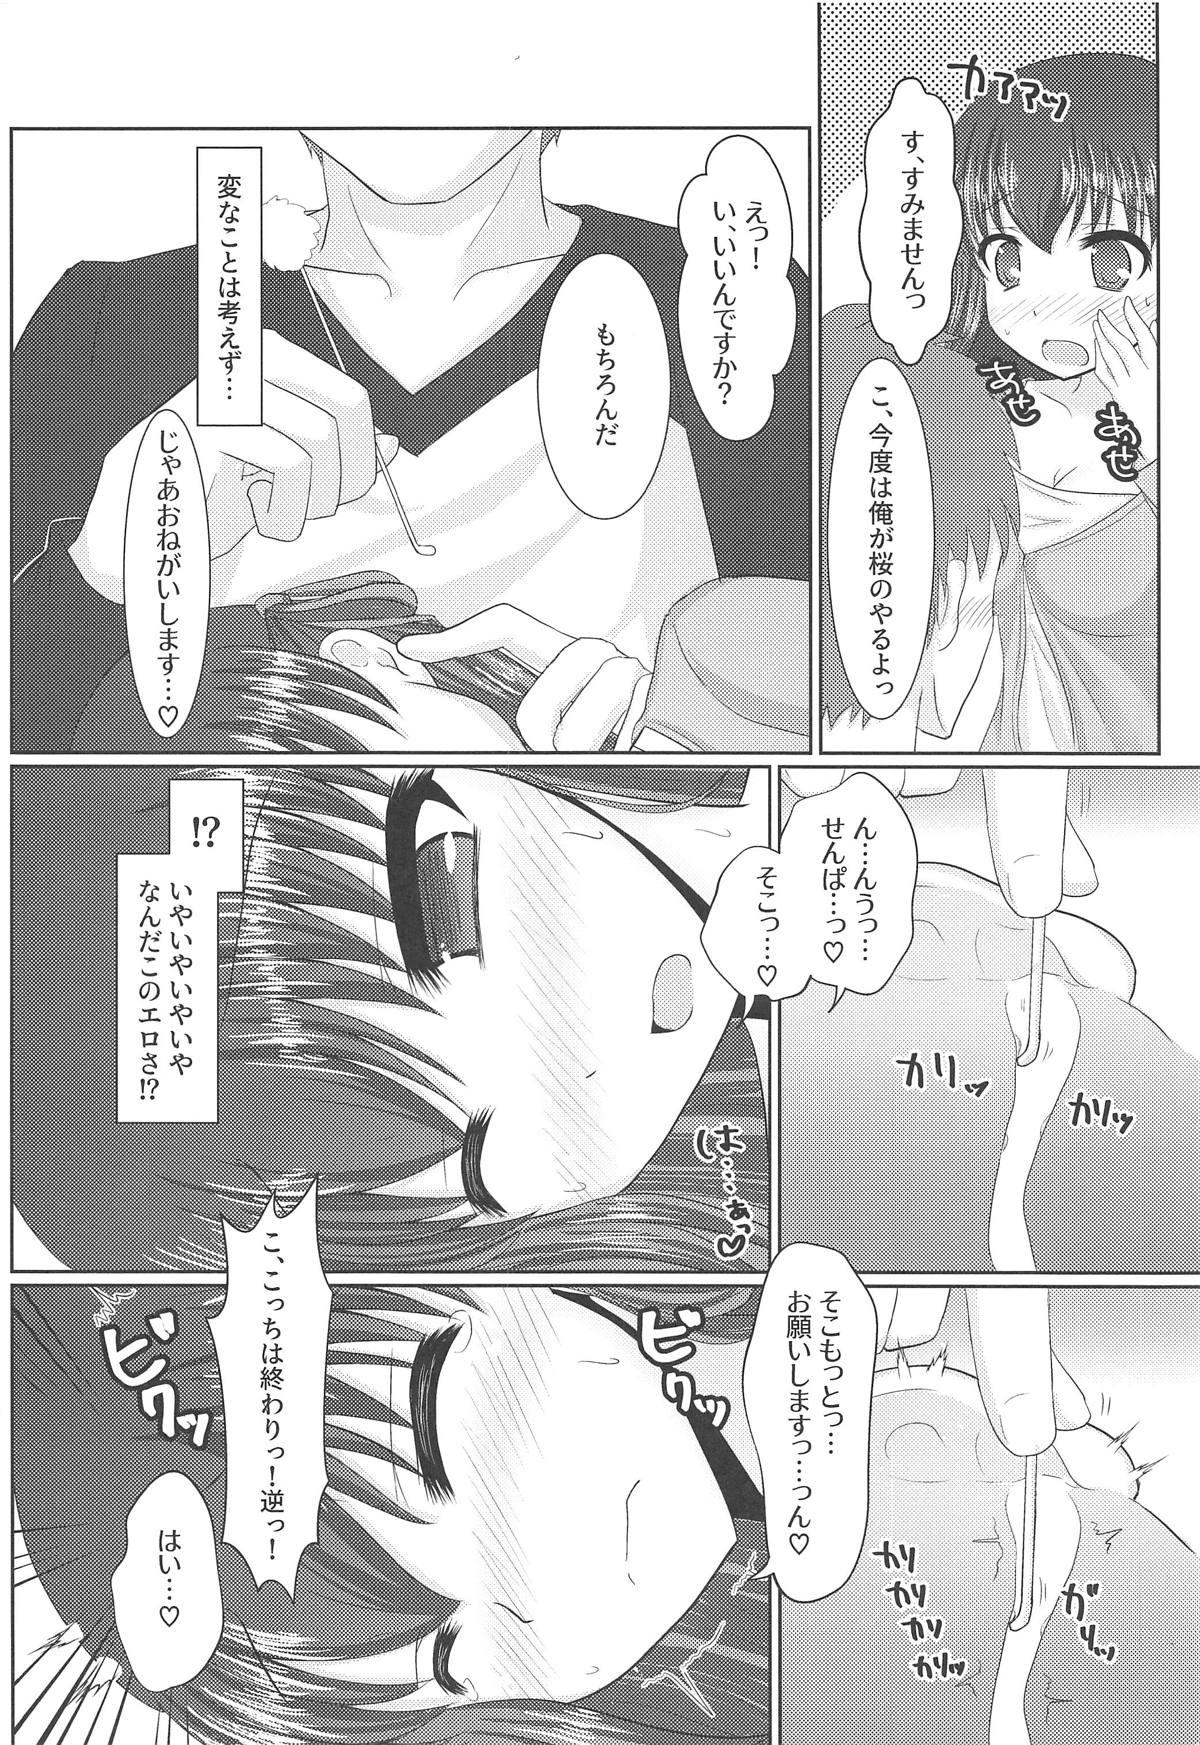 Sola Hiza no Ue ni Sakura - Fate stay night Camsex - Page 7